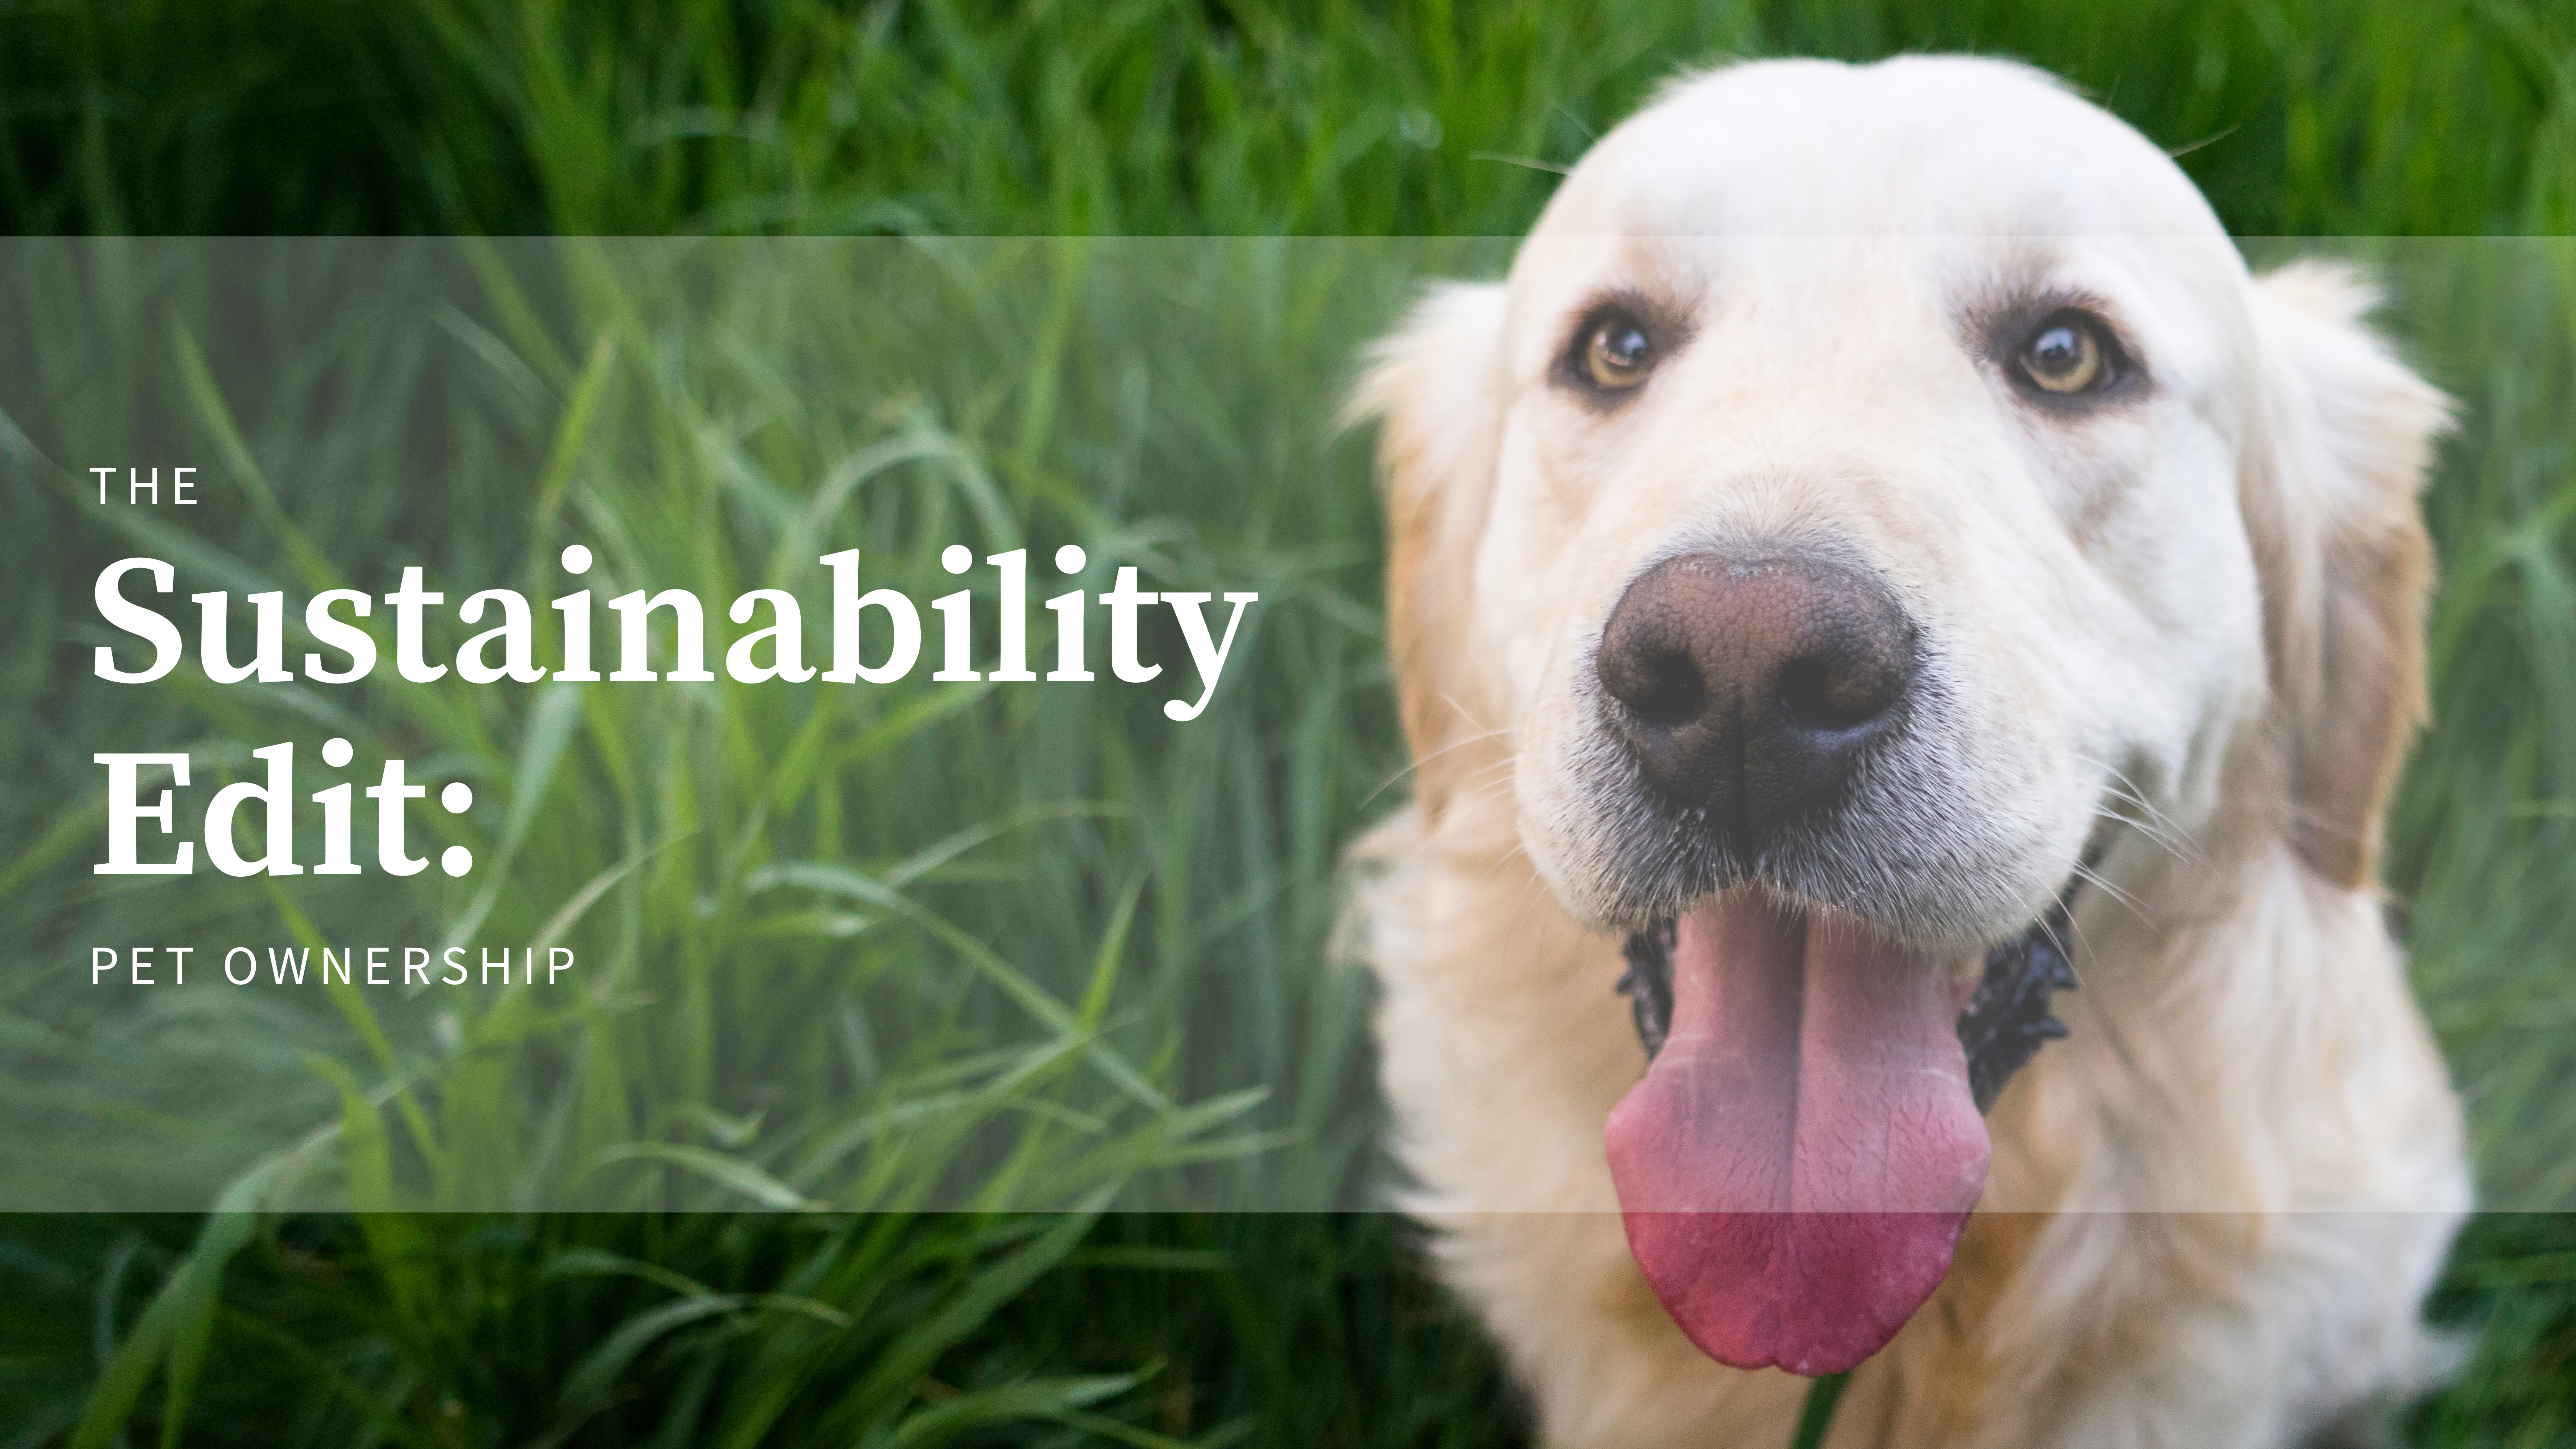 The Sustainability Edit: Pet Ownership